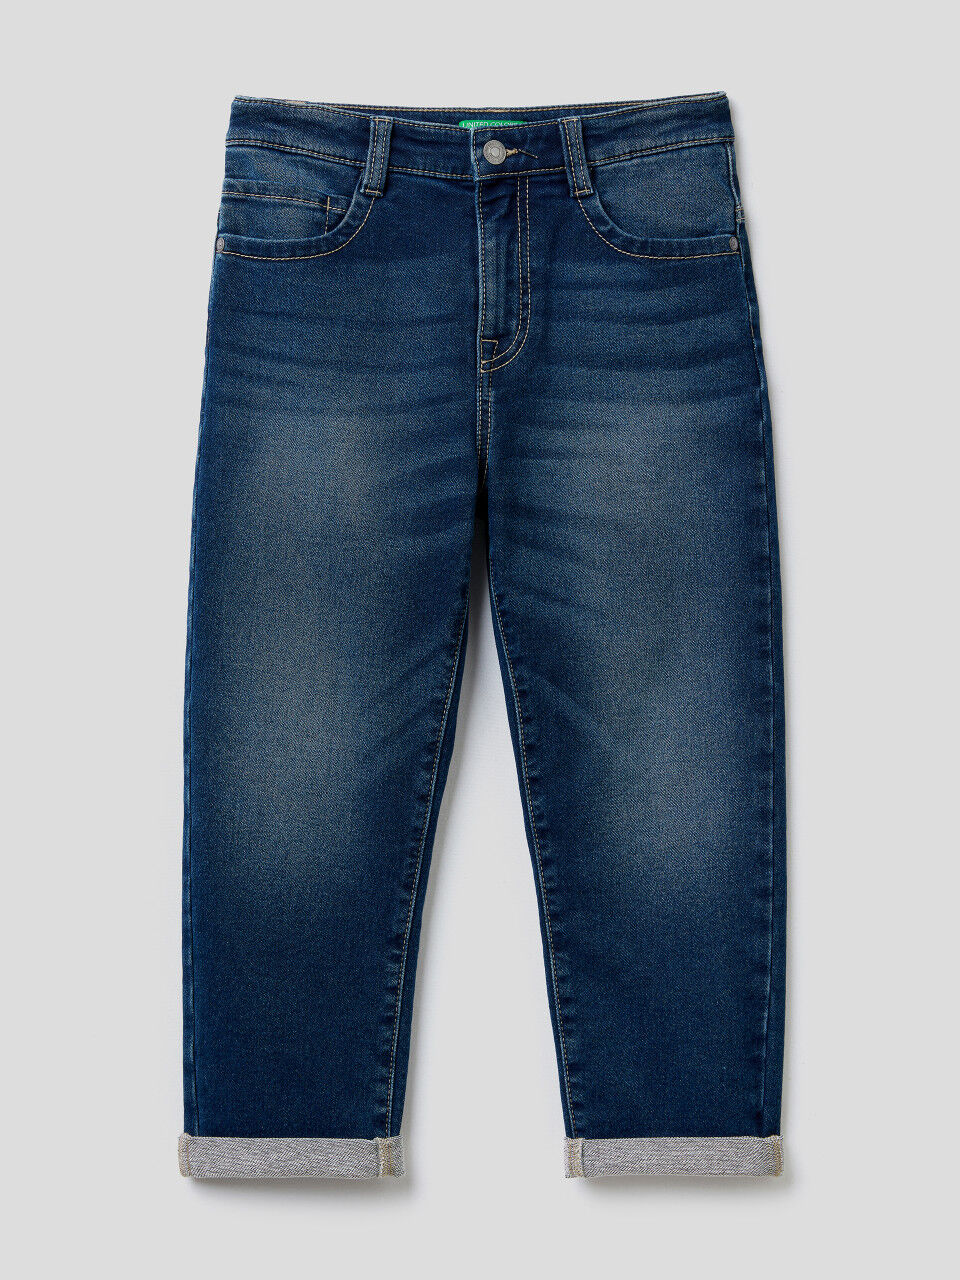 Shop Boys Jeans & Khakis! Solid Denim Pants For Boys|001A KF-B-DP-664